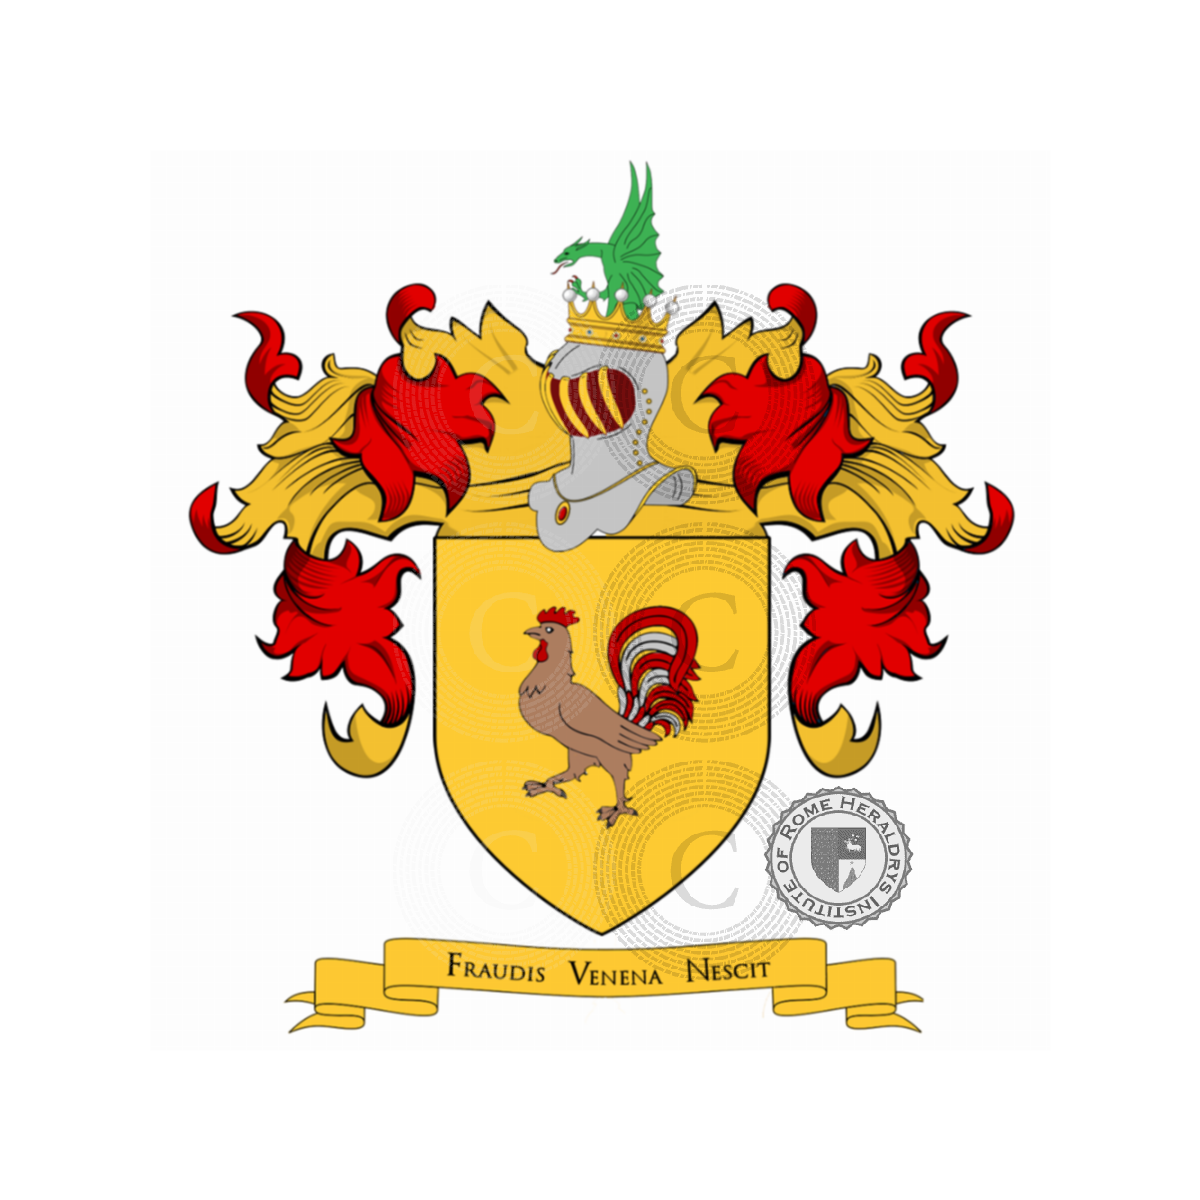 Wappen der FamilieGallo